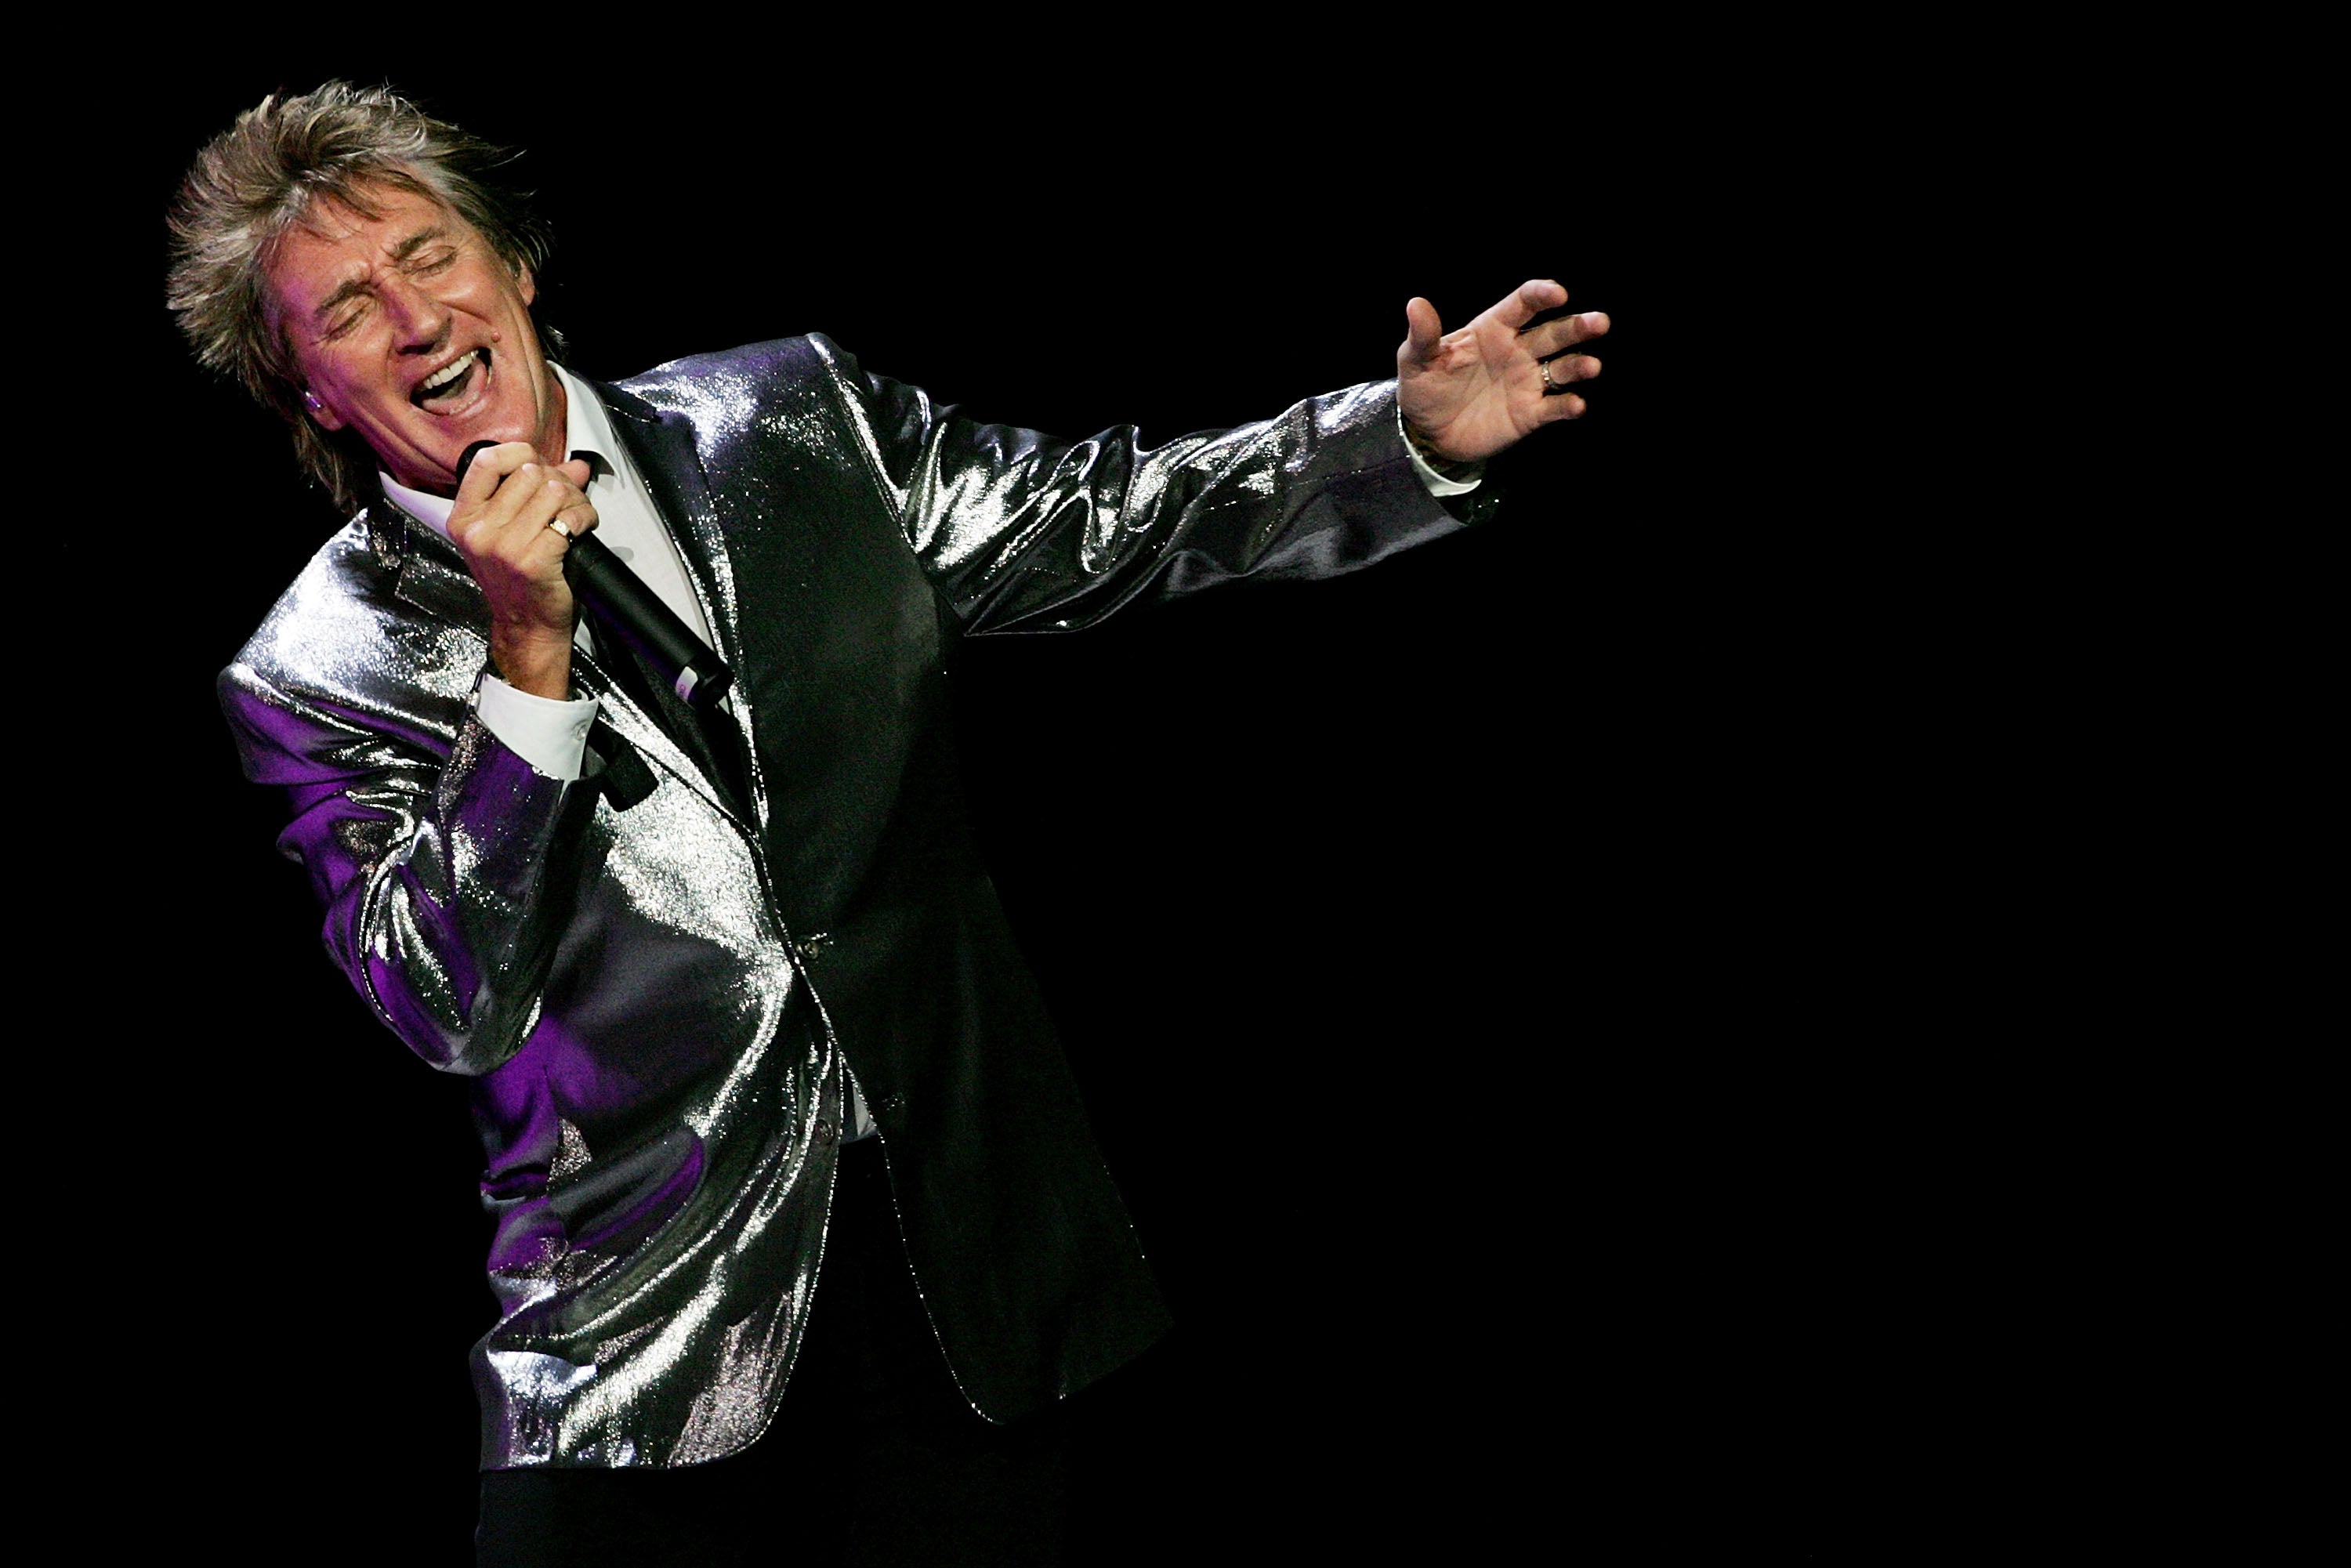 Rod Stewart performing in Sydney, Australia in 2008